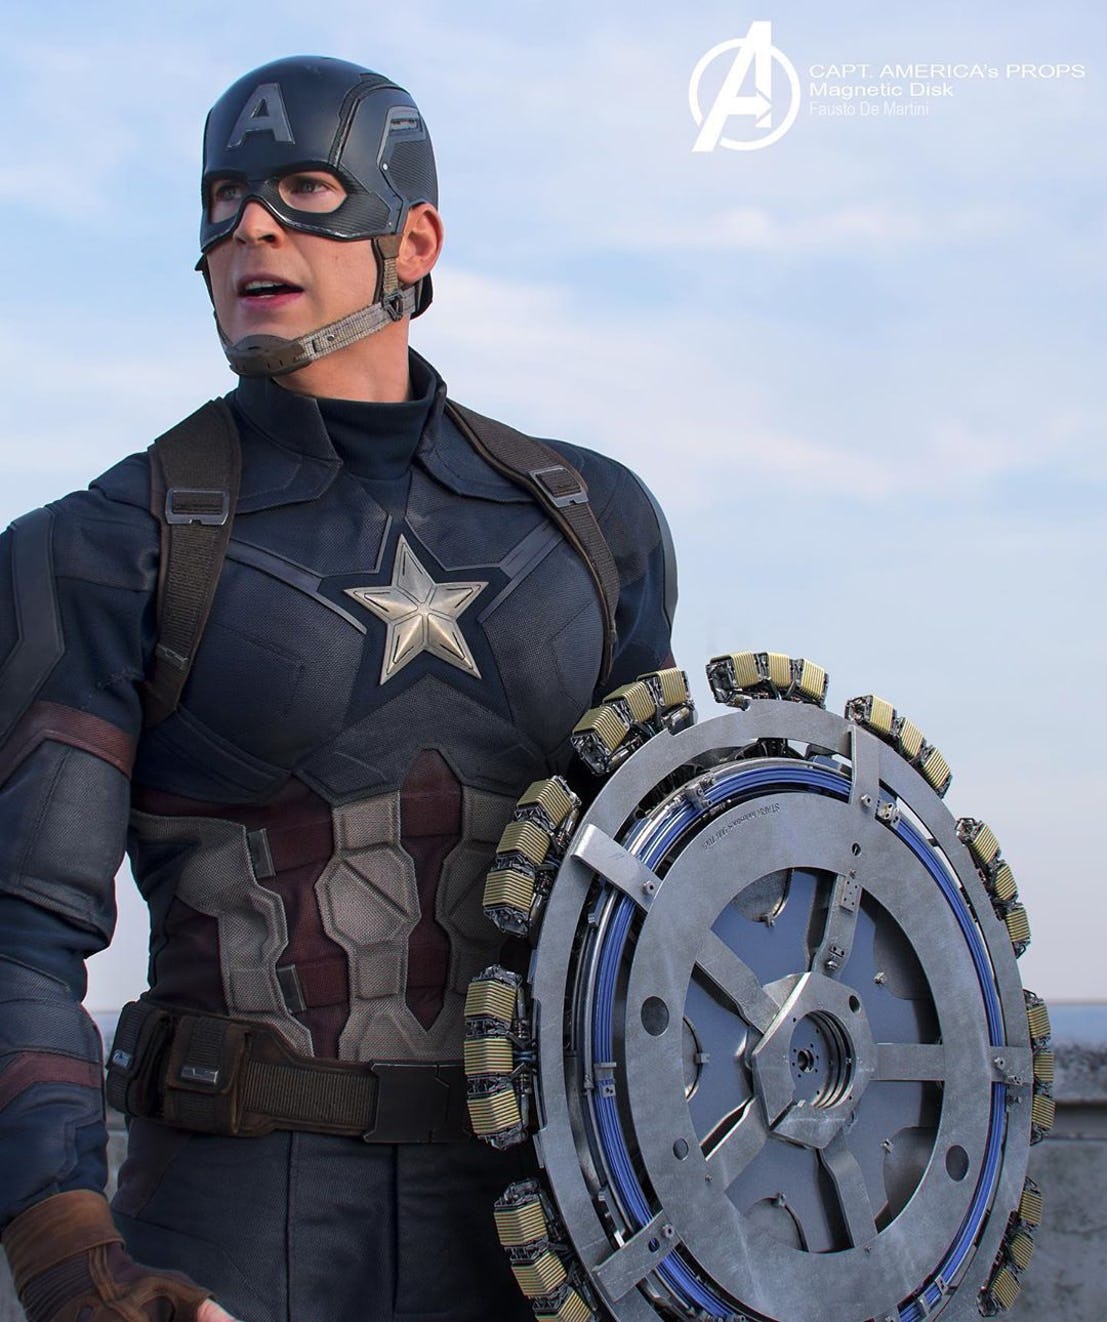 Captain-America-Holding-Alternate-Infinity-War-Shield-by-Fausto-De-Martini.jpg